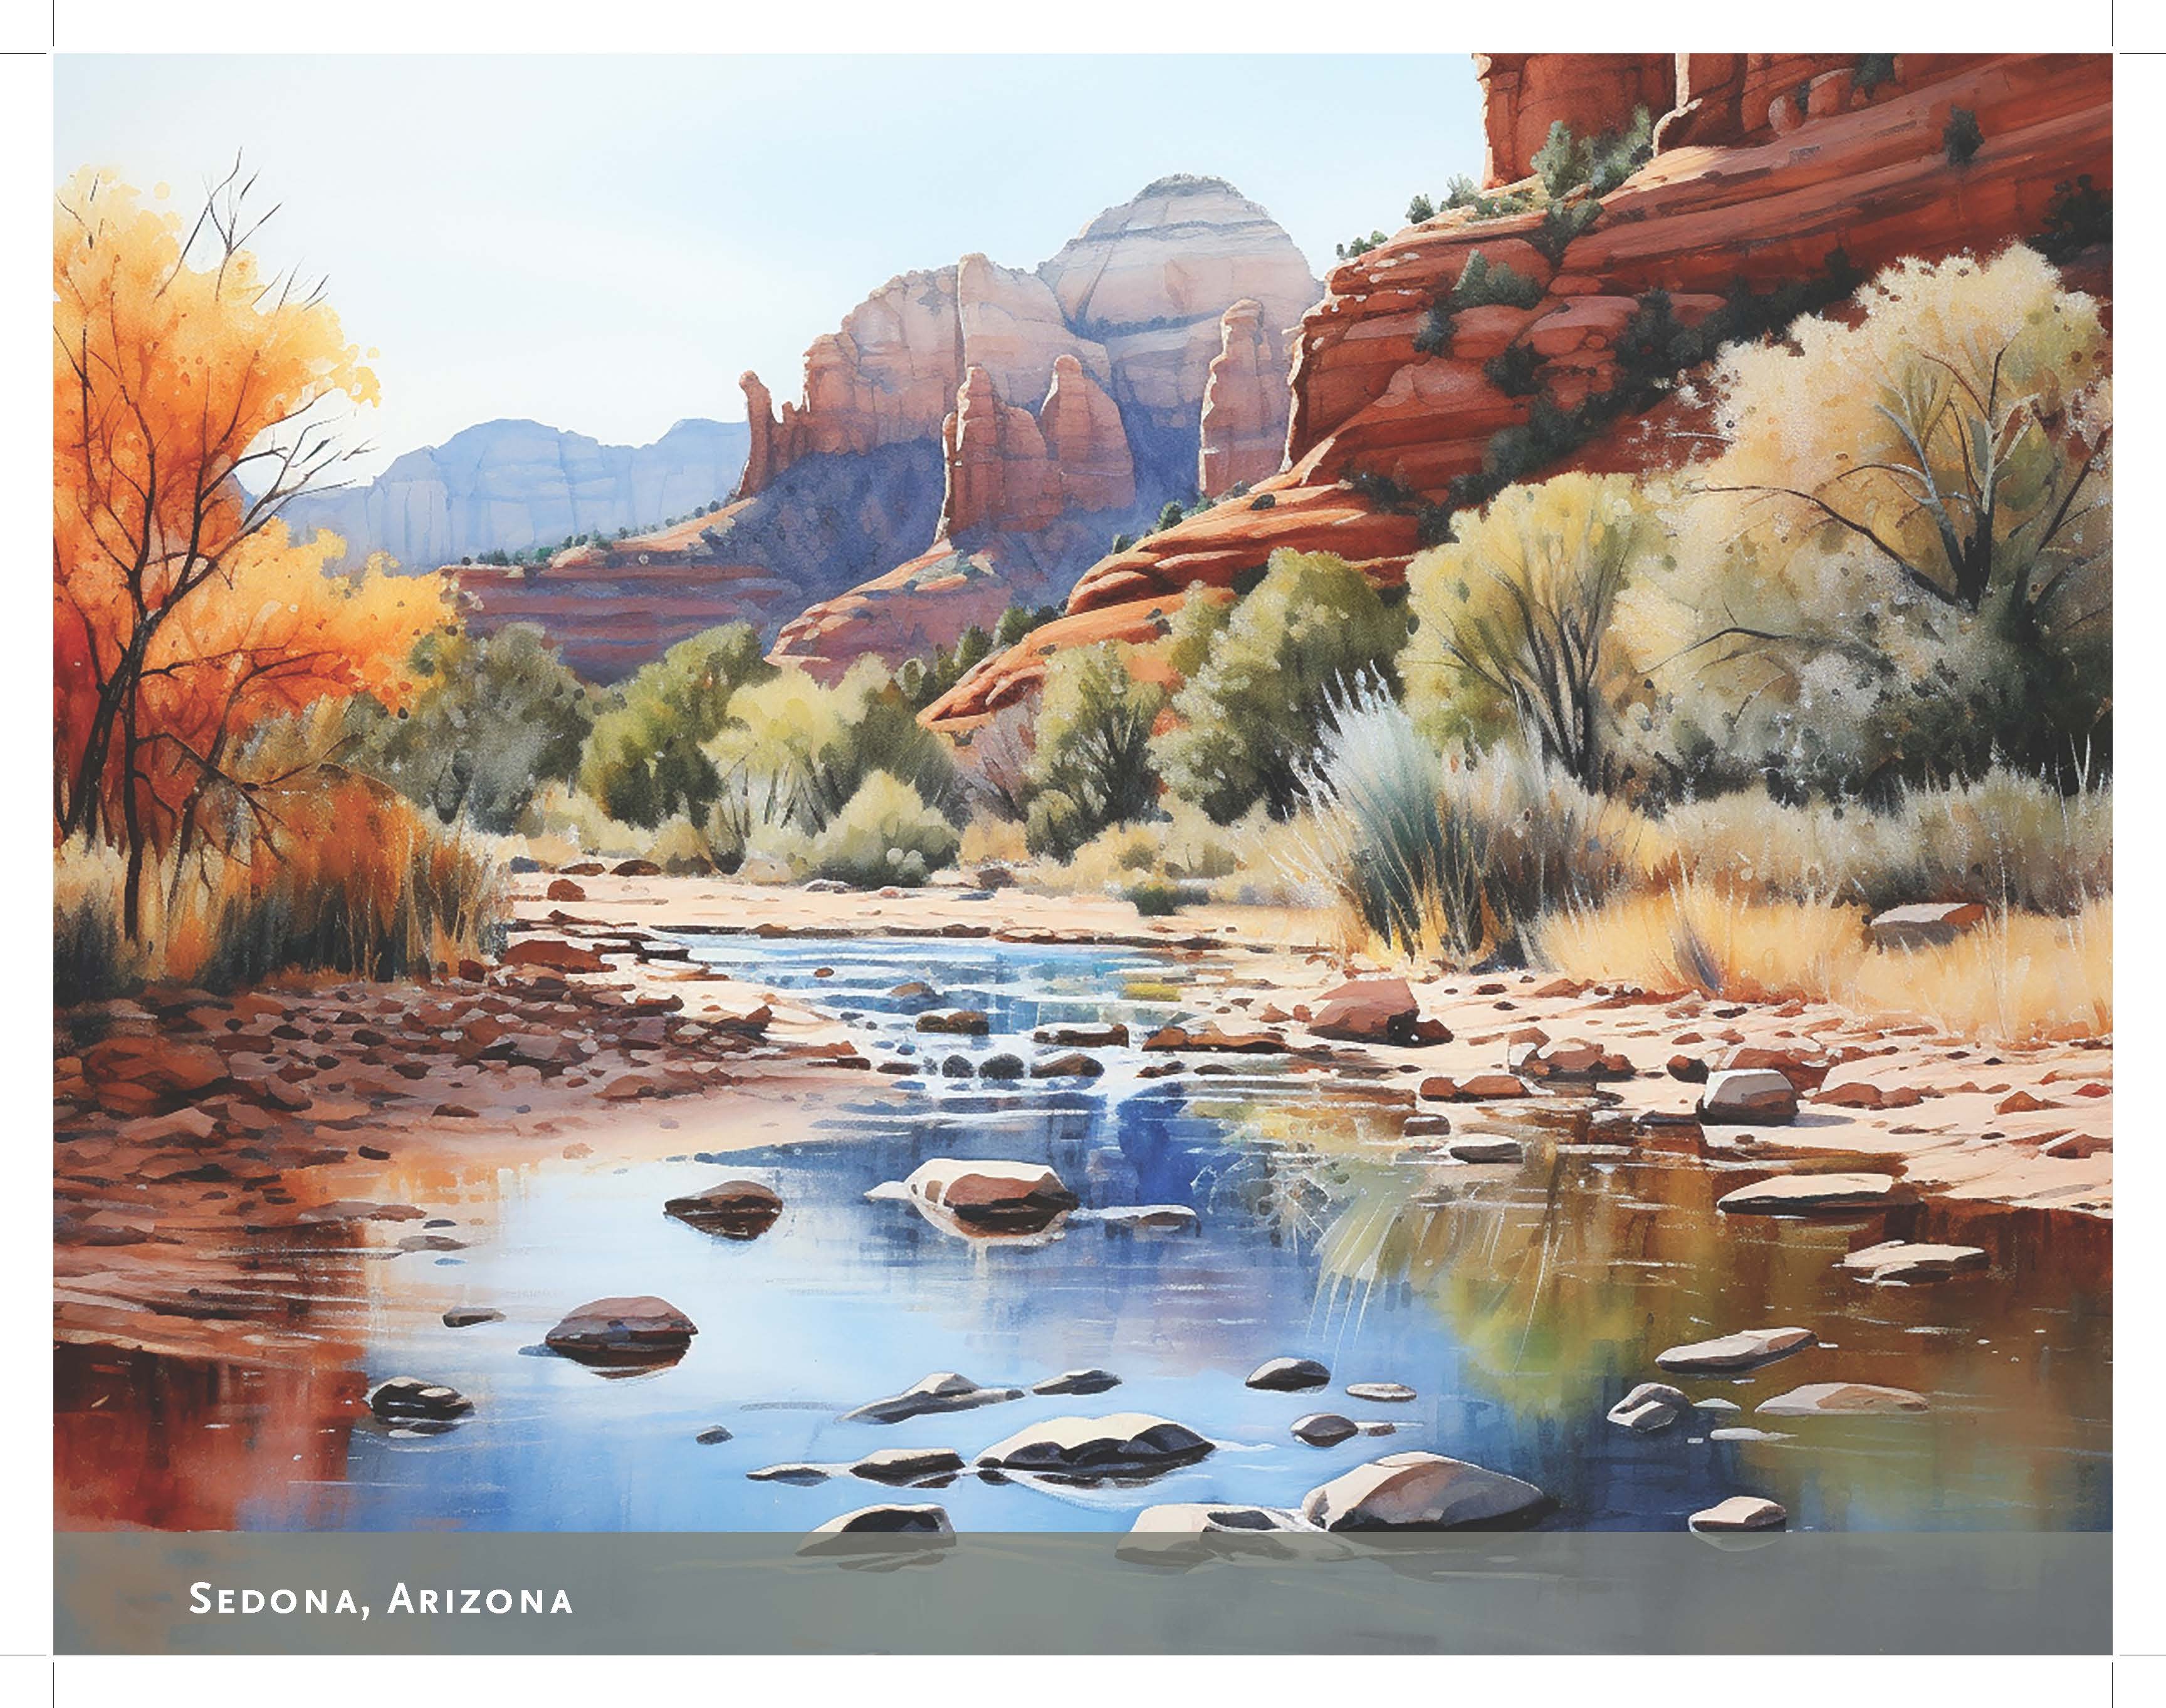 2024 Calendar: Art of the American Southwest